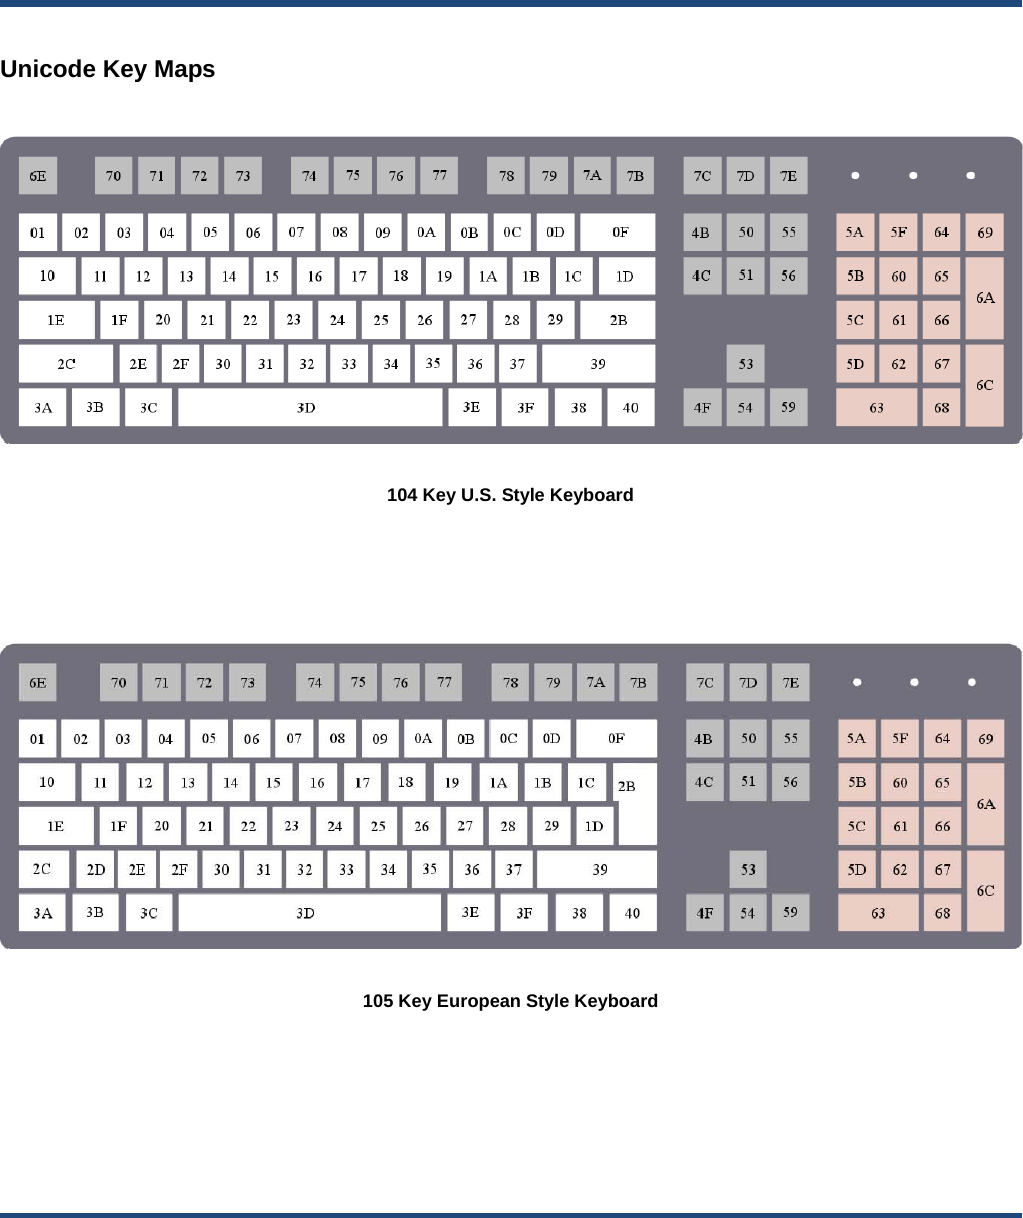                                                                                             Unicode Key Maps    104 Key U.S. Style Keyboard       105 Key European Style Keyboard 